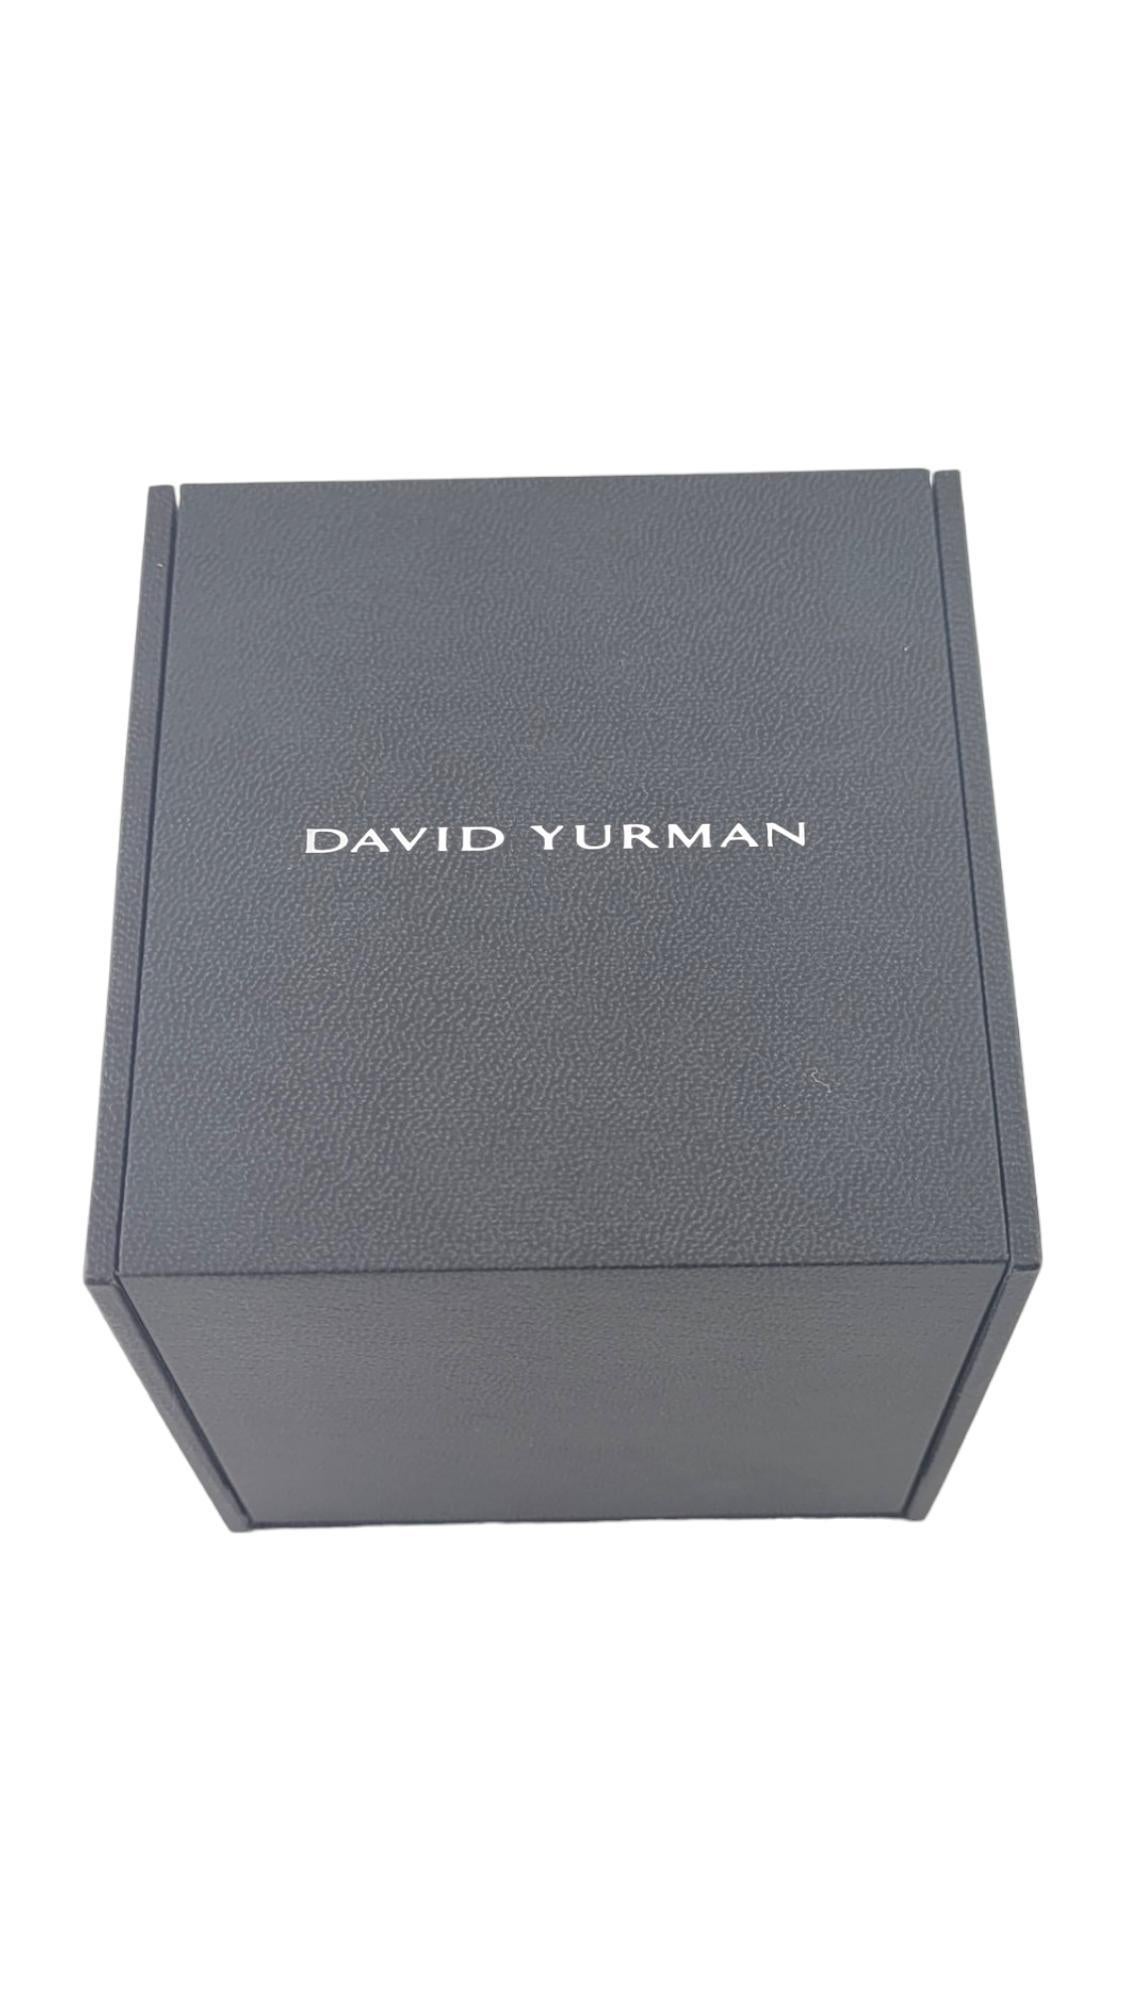 David Yurman Sterling Silver Tag Pendant Necklace #17405 5